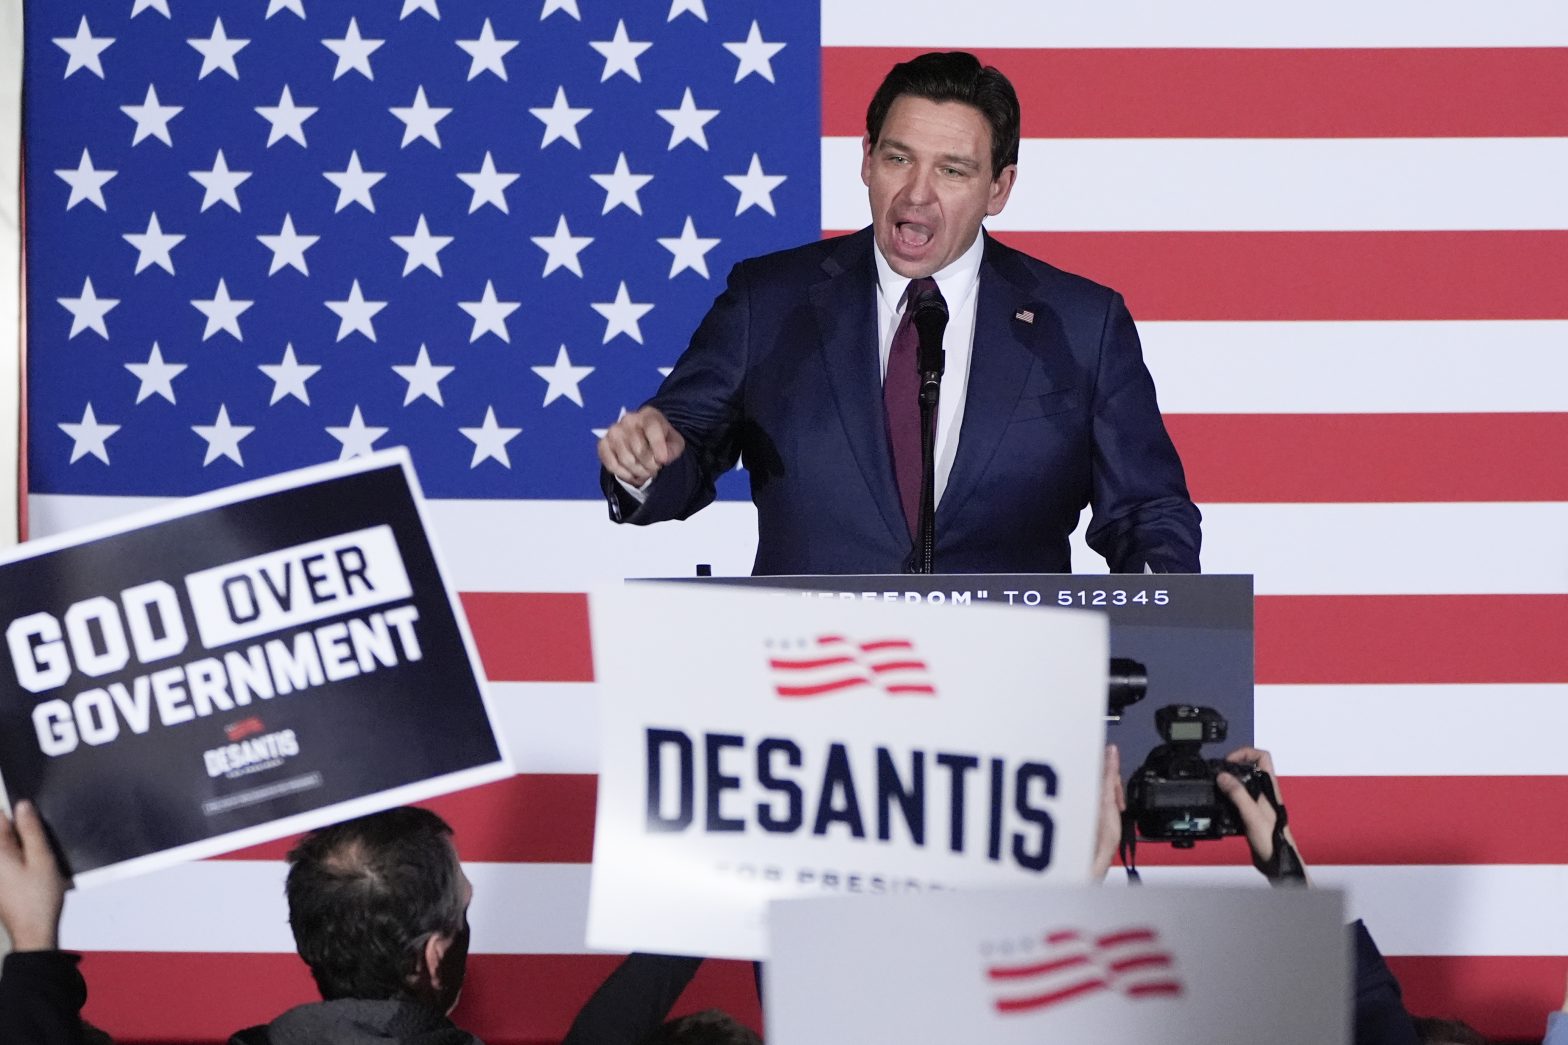 DeSantis Ends Struggling Presidential Bid Before New Hampshire, Endorses Trump